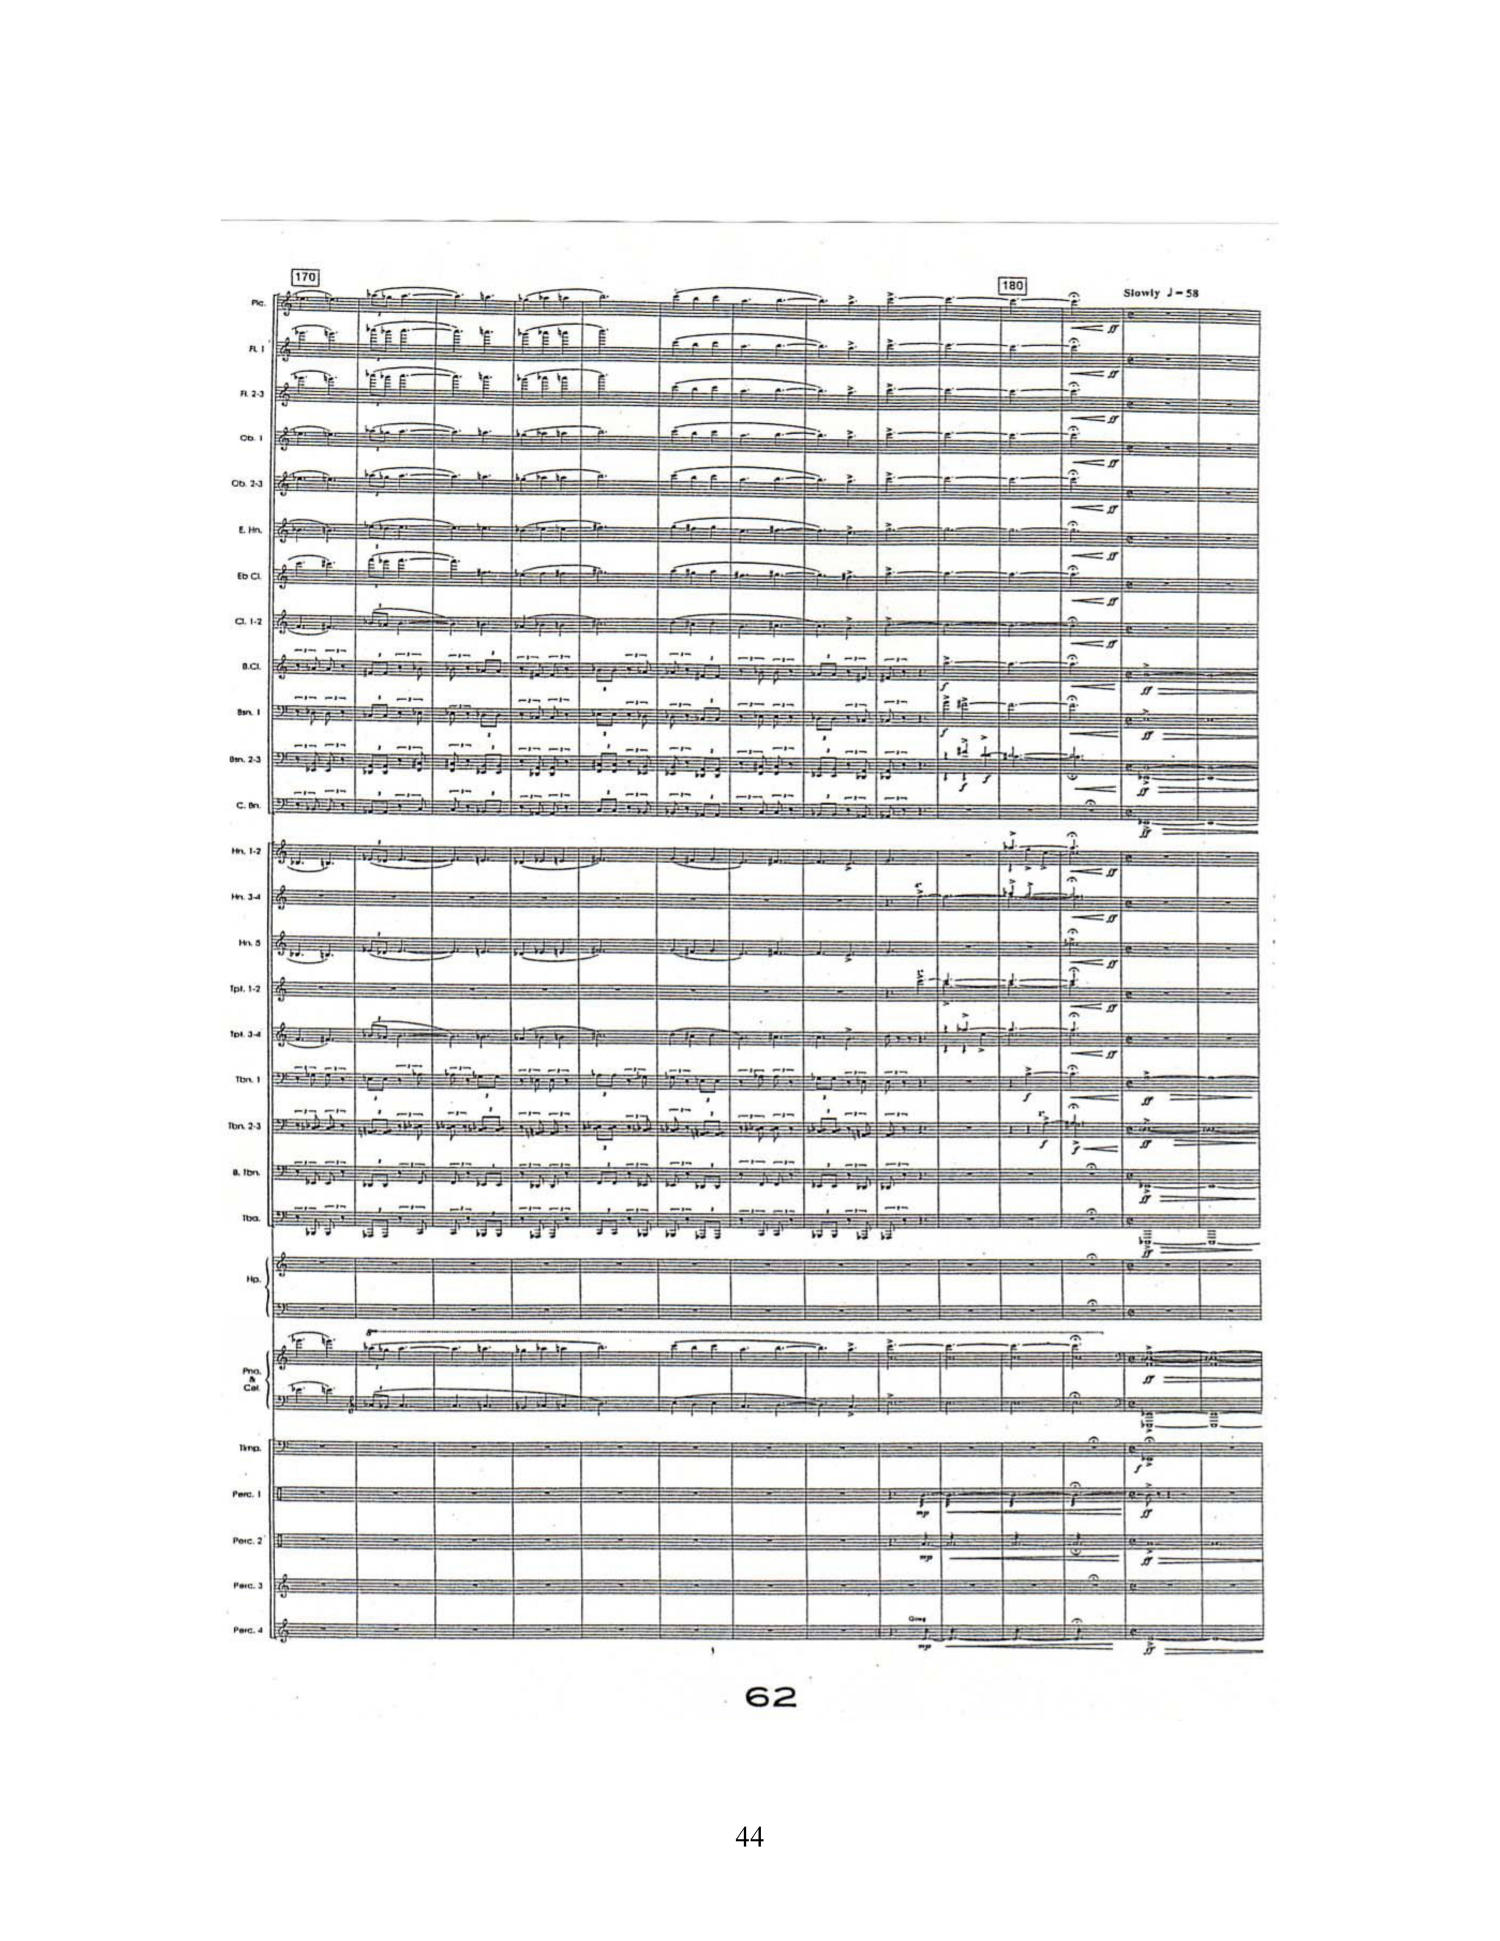 Hemispheres for Wind Ensemble by Joseph Turrin: A Critical Analysis
                                                
                                                    44
                                                